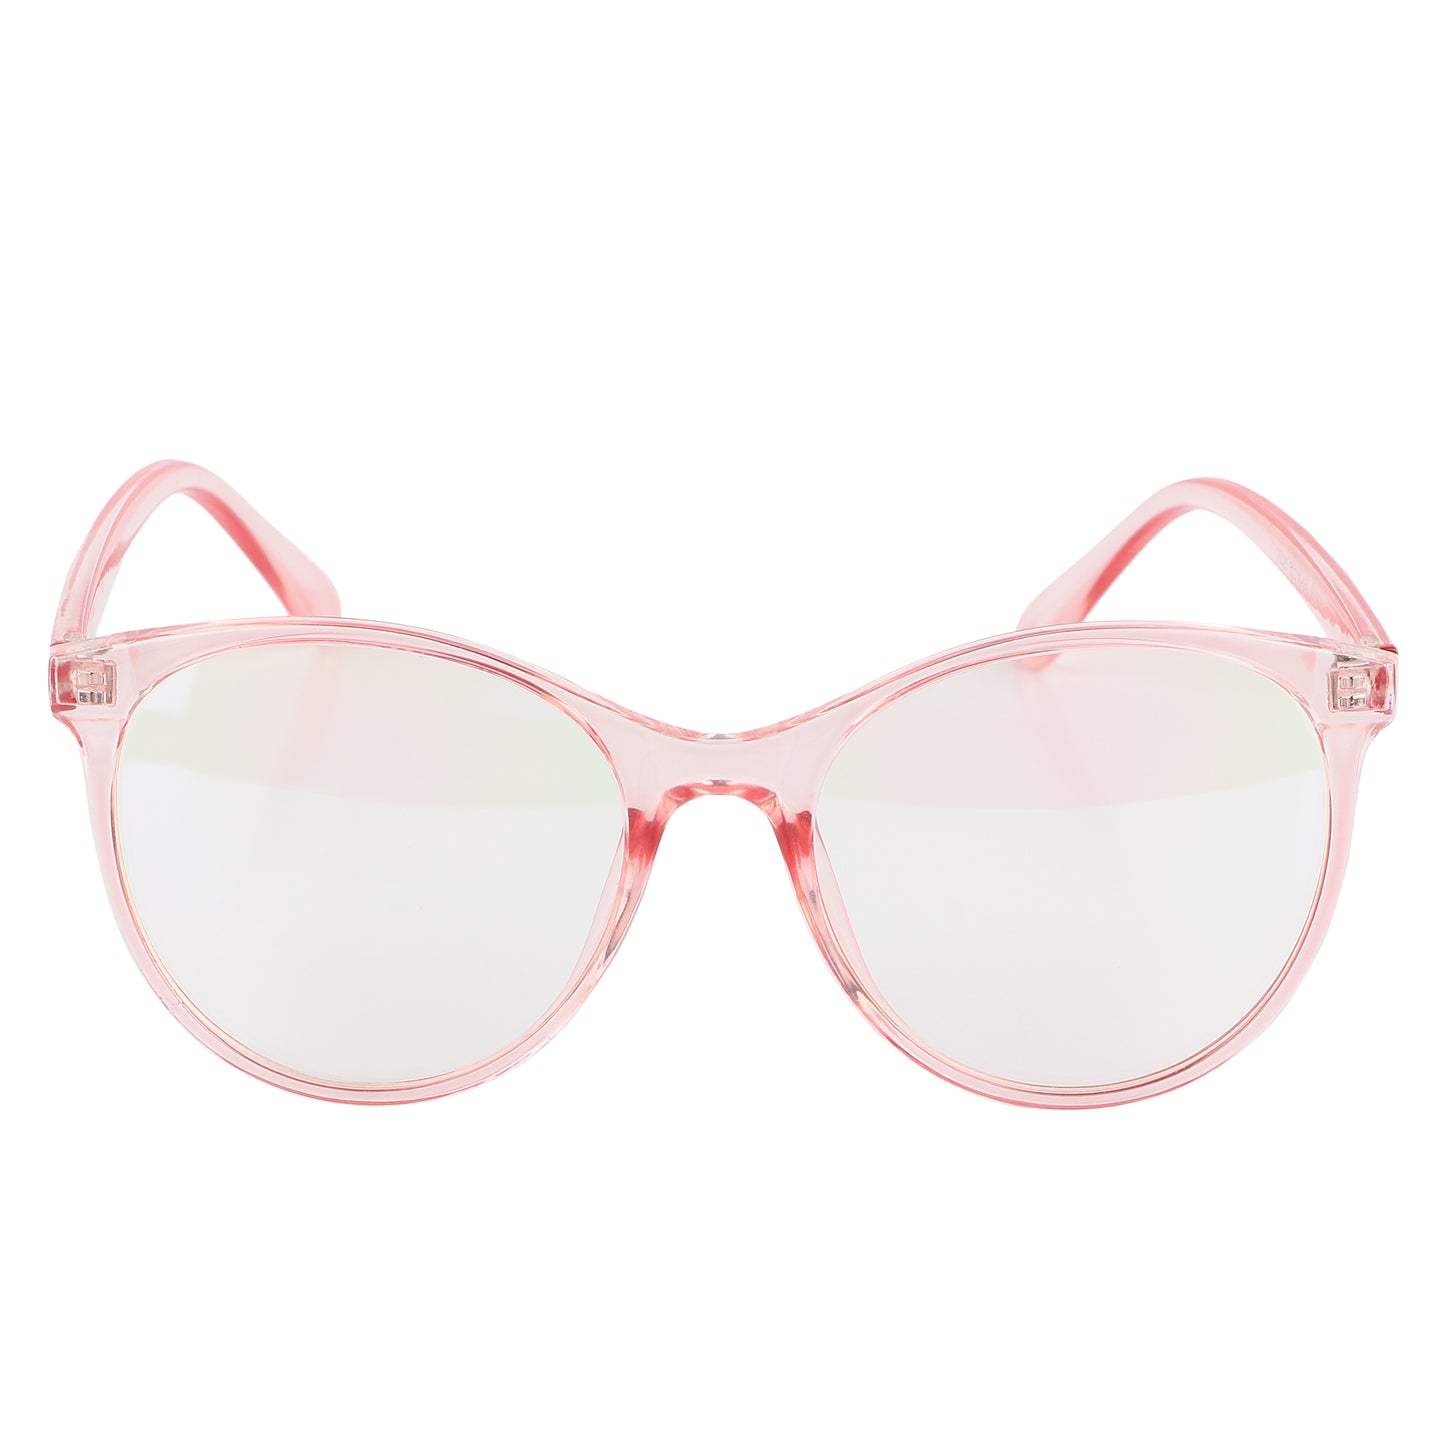 Jodykoes Oversize Fashionable Anti Glare Round Frame (Pink) - Jodykoes ®